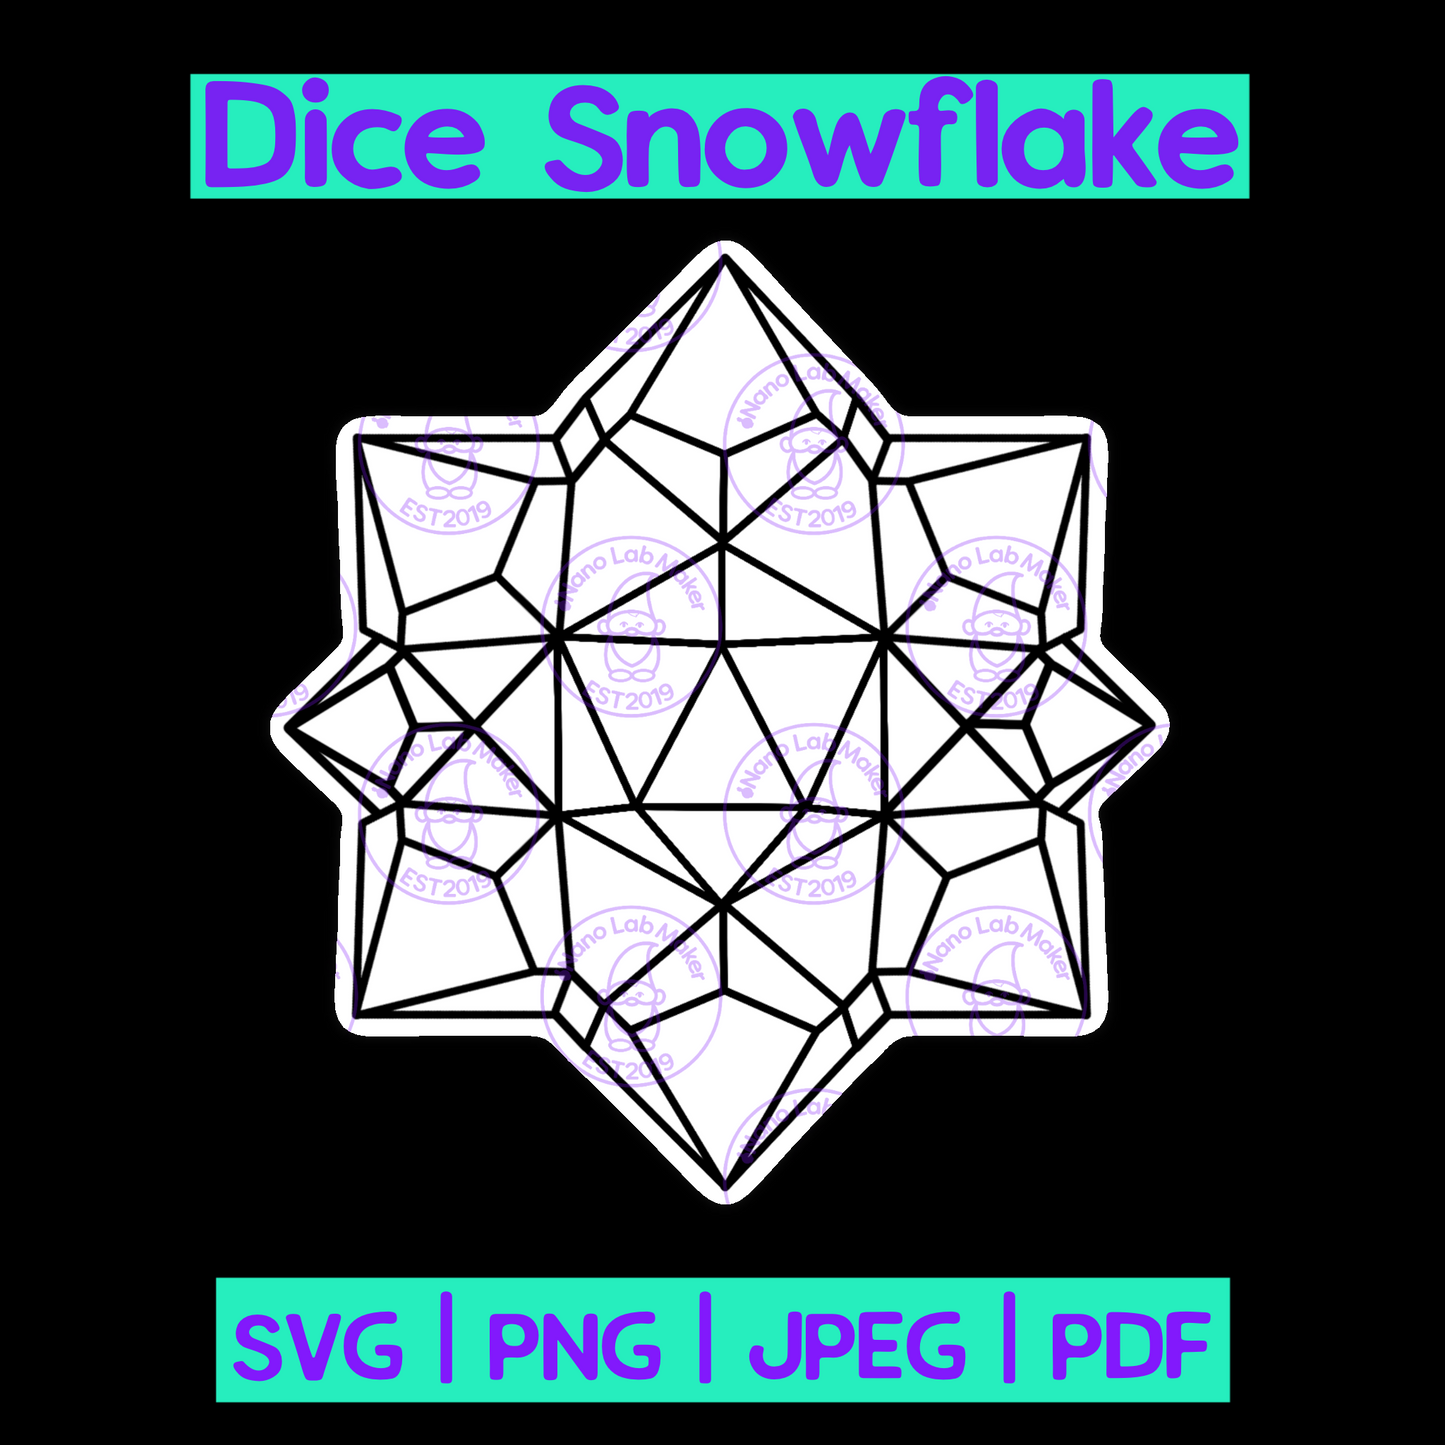 Dice Snowflake